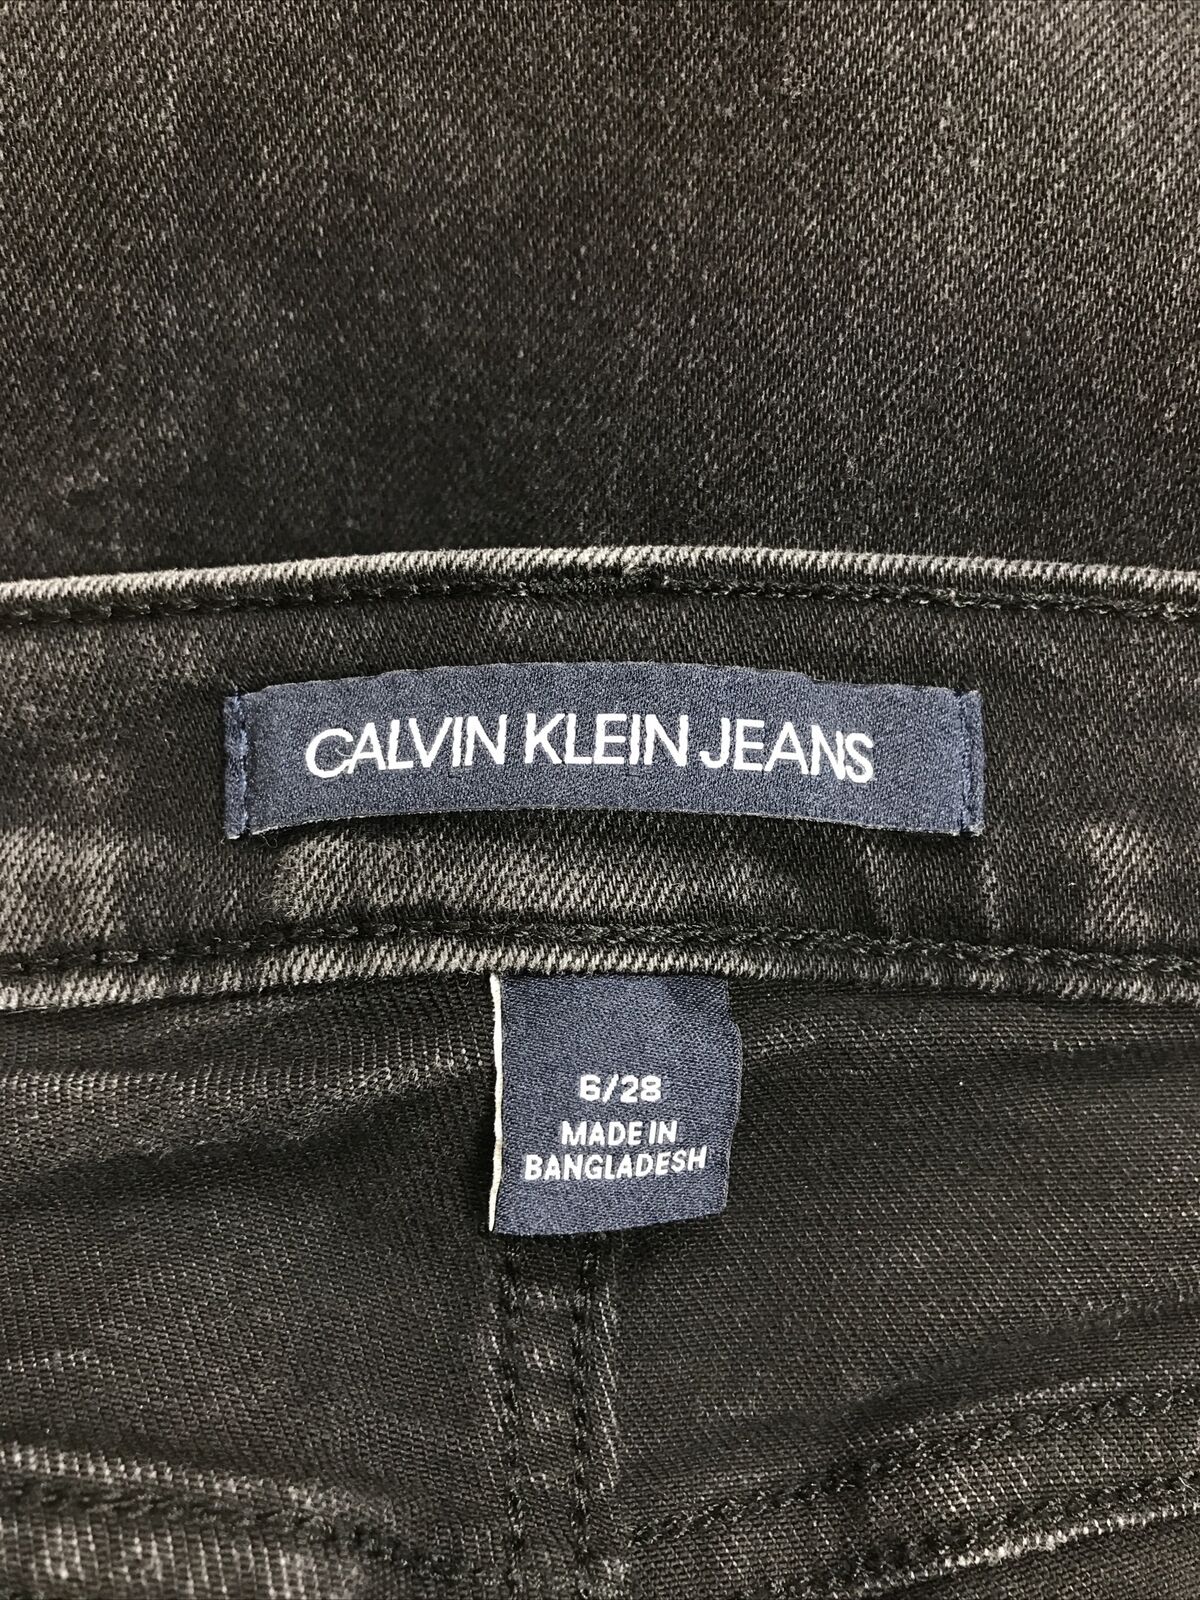 Calvin Klein Women's Black Denim Stretch High Rise Skinny Jeans - 6/28